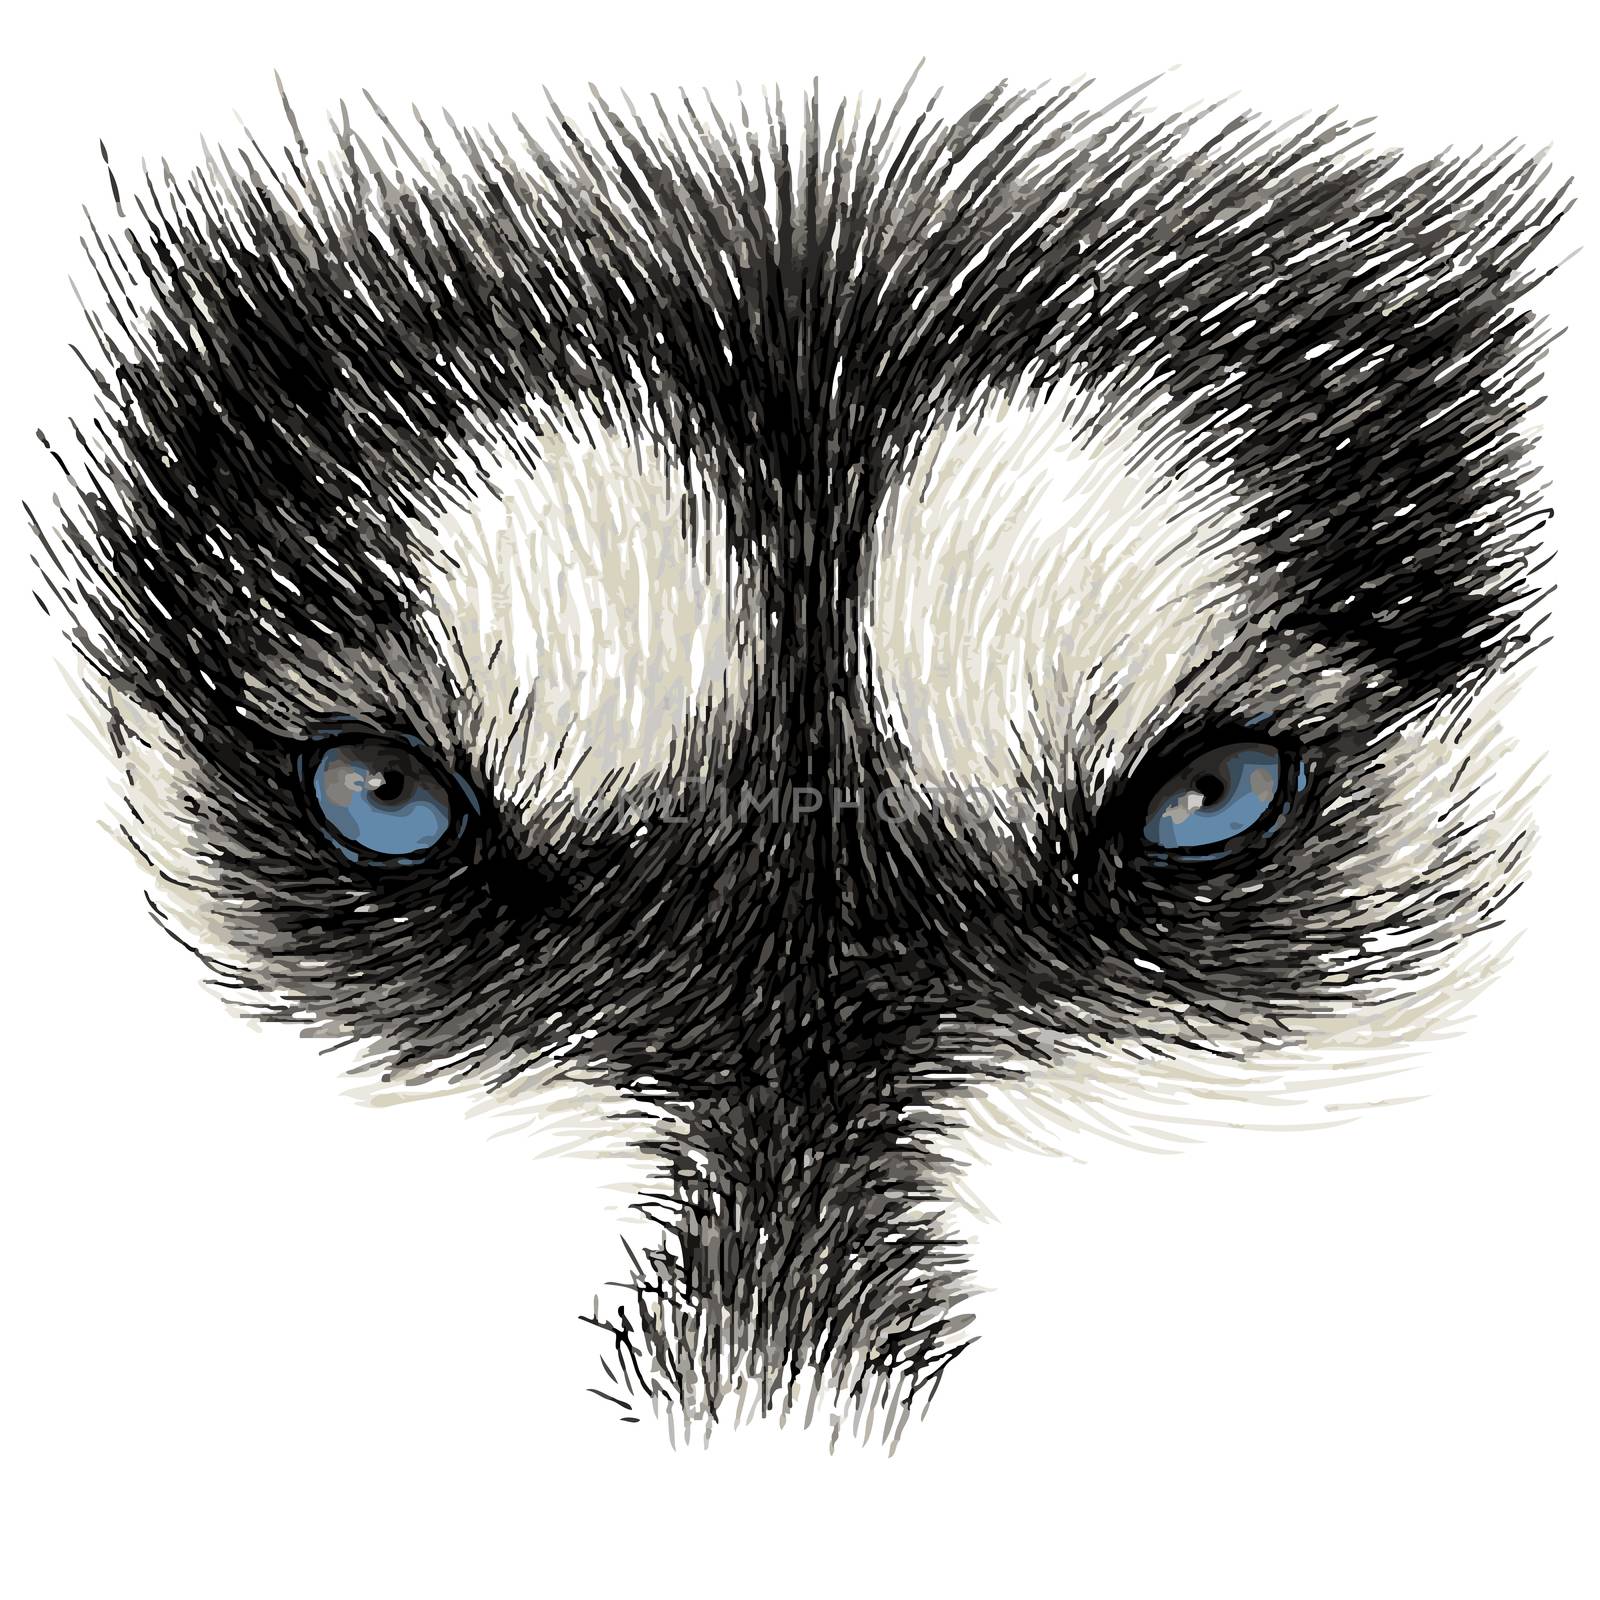 The eyes of Siberian Husky by simpleBE